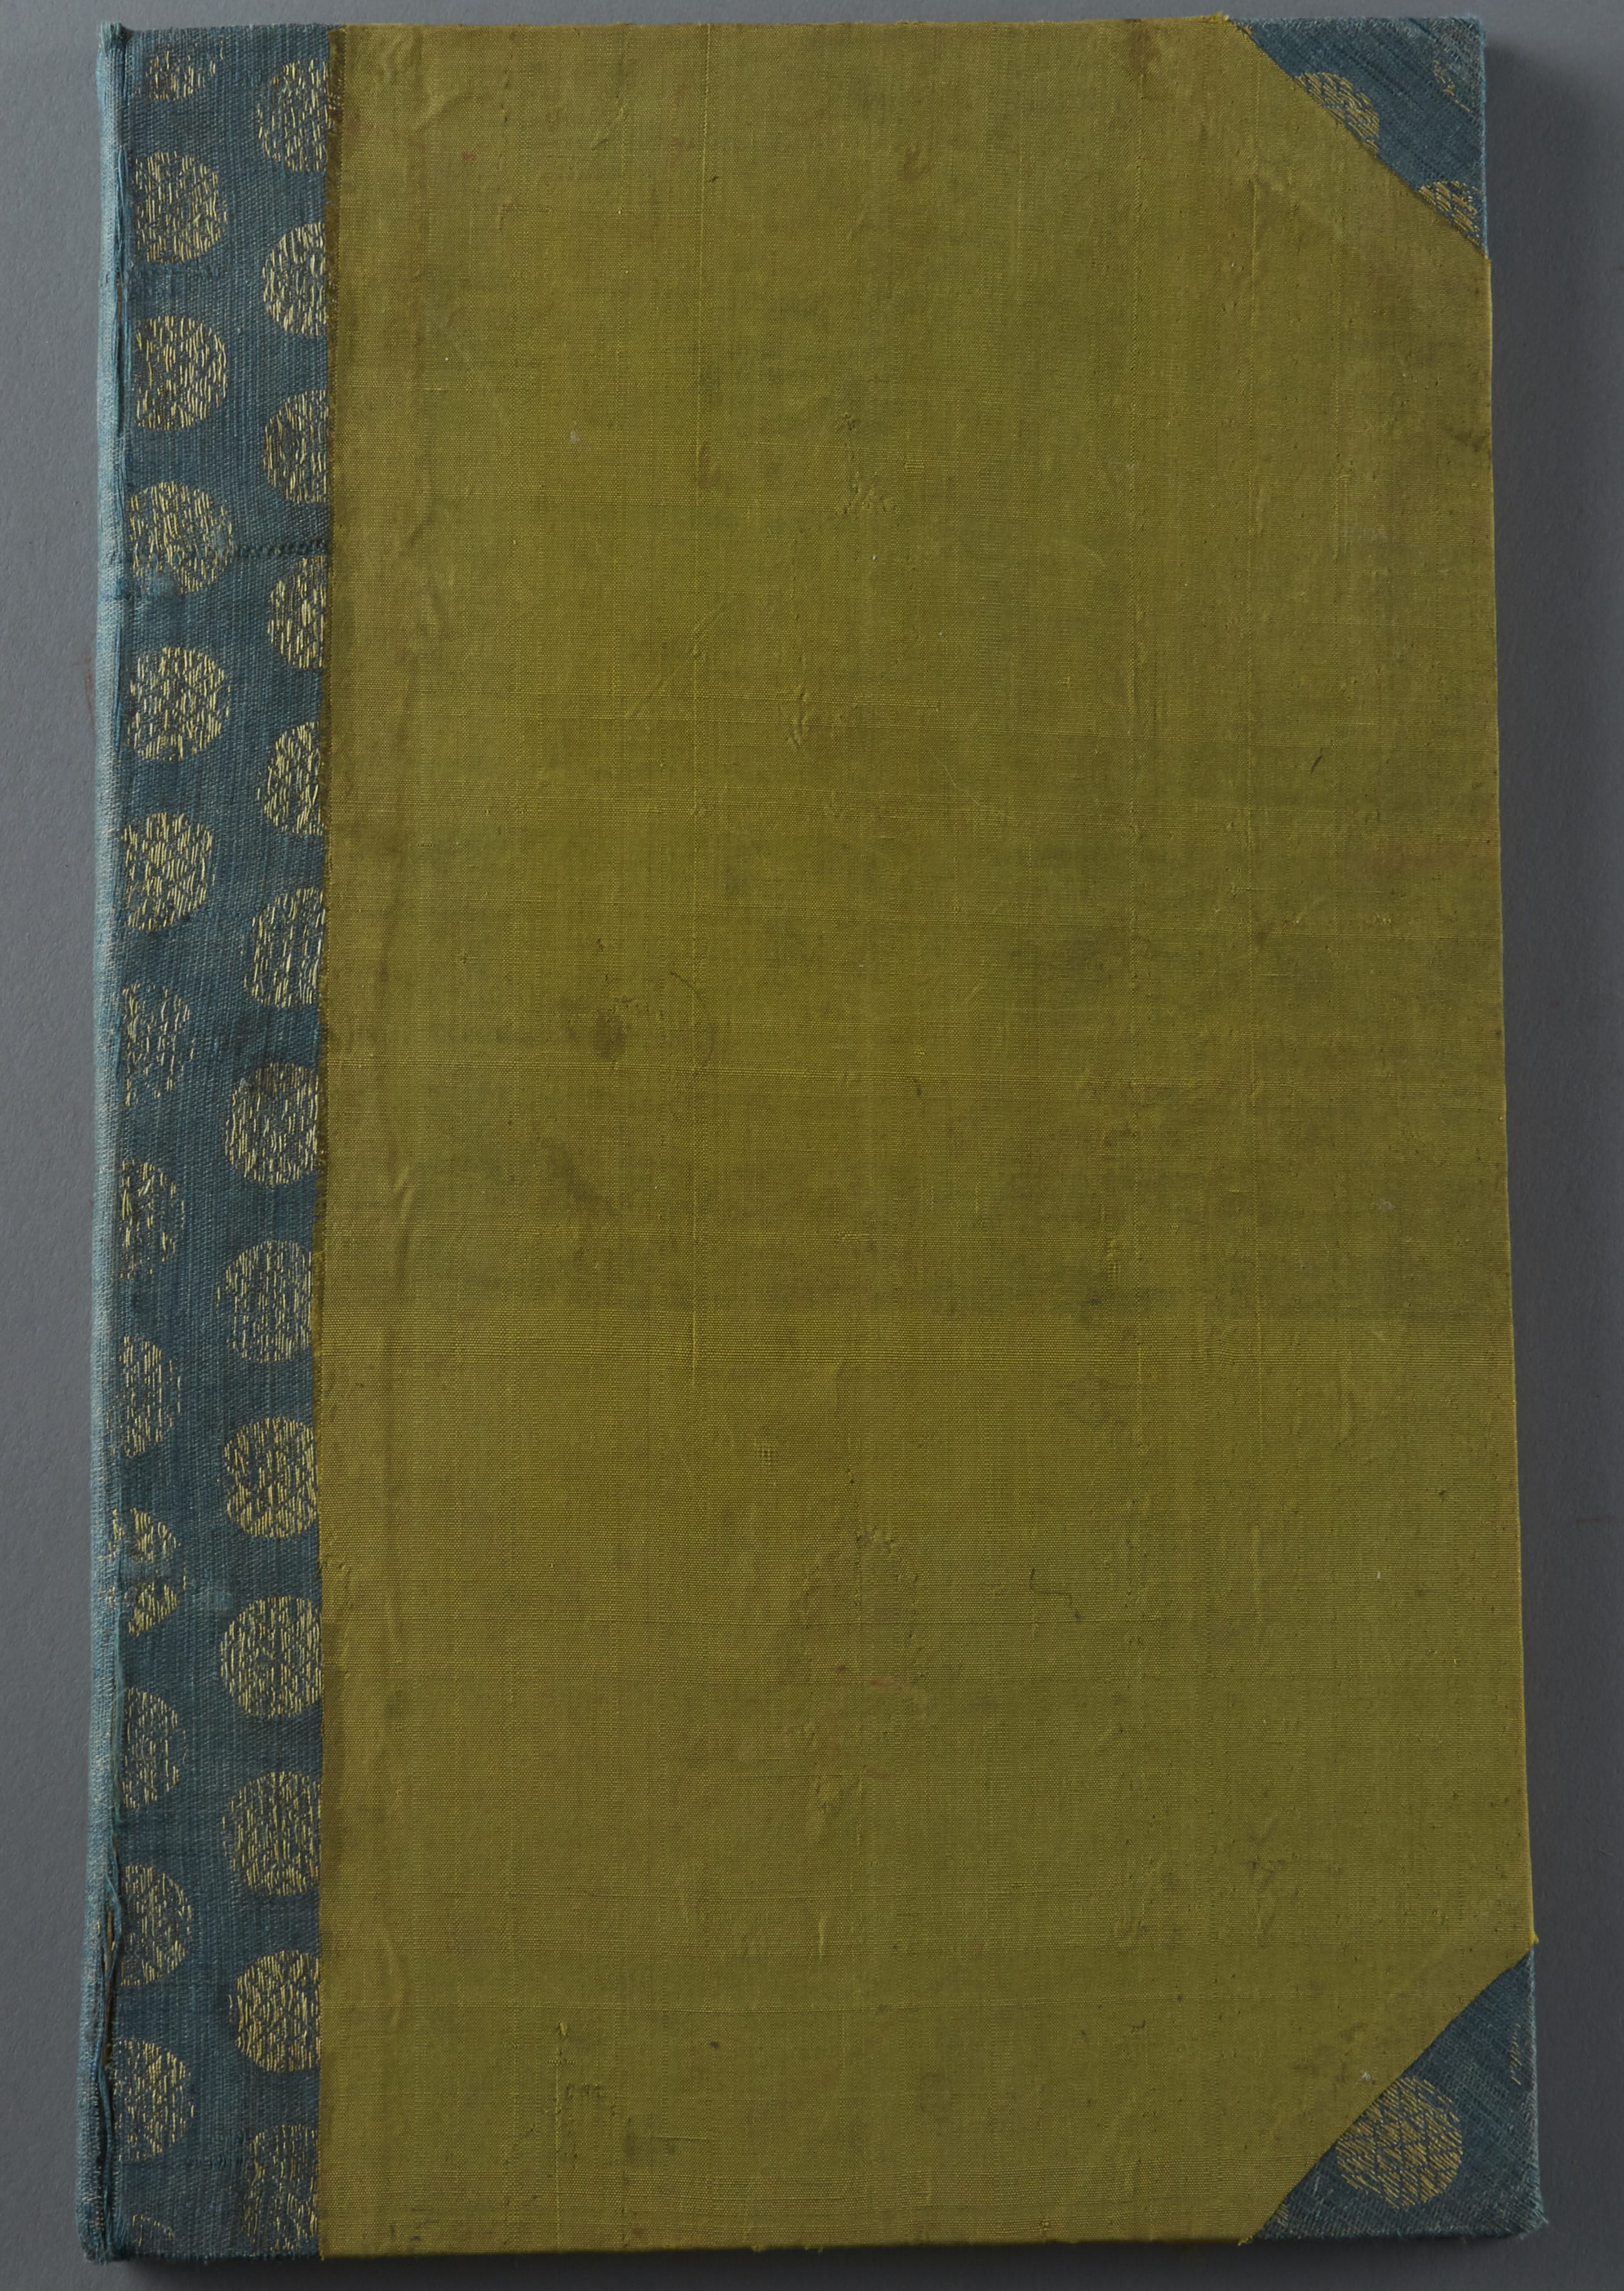 Lot 170: Persian 19th/20th century Illuminated Manuscript Depicting the Story of Nal and Damayanti: full book